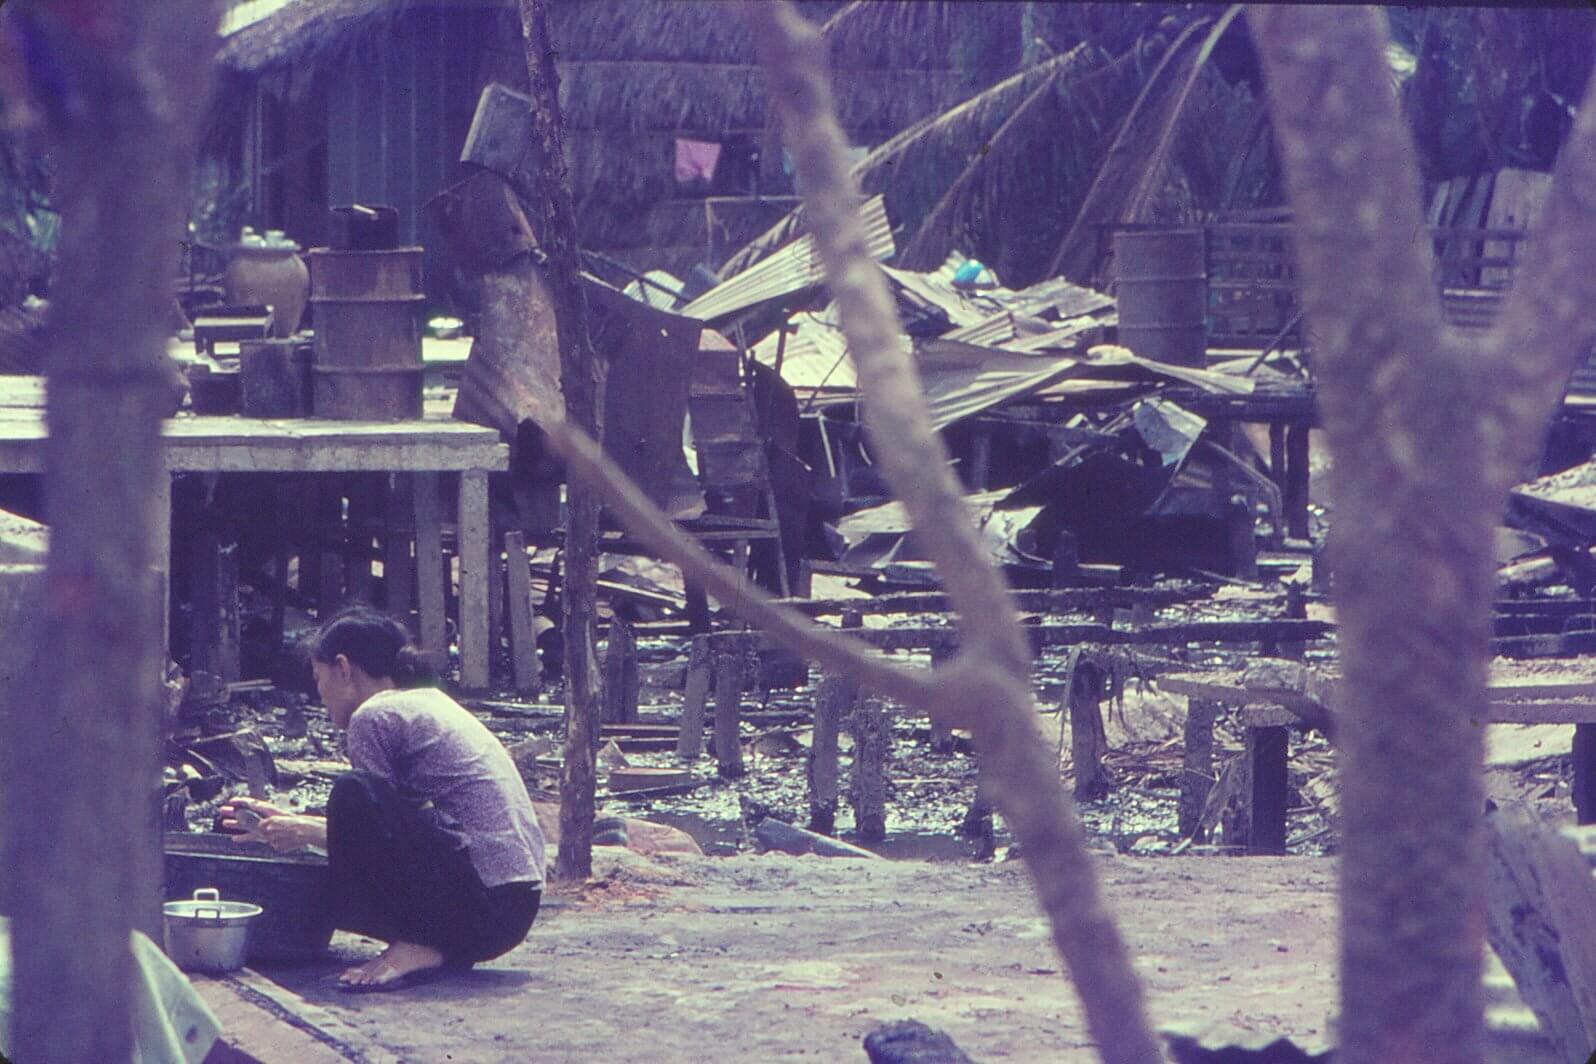 A Vietnamese woman squatting amid rubble.